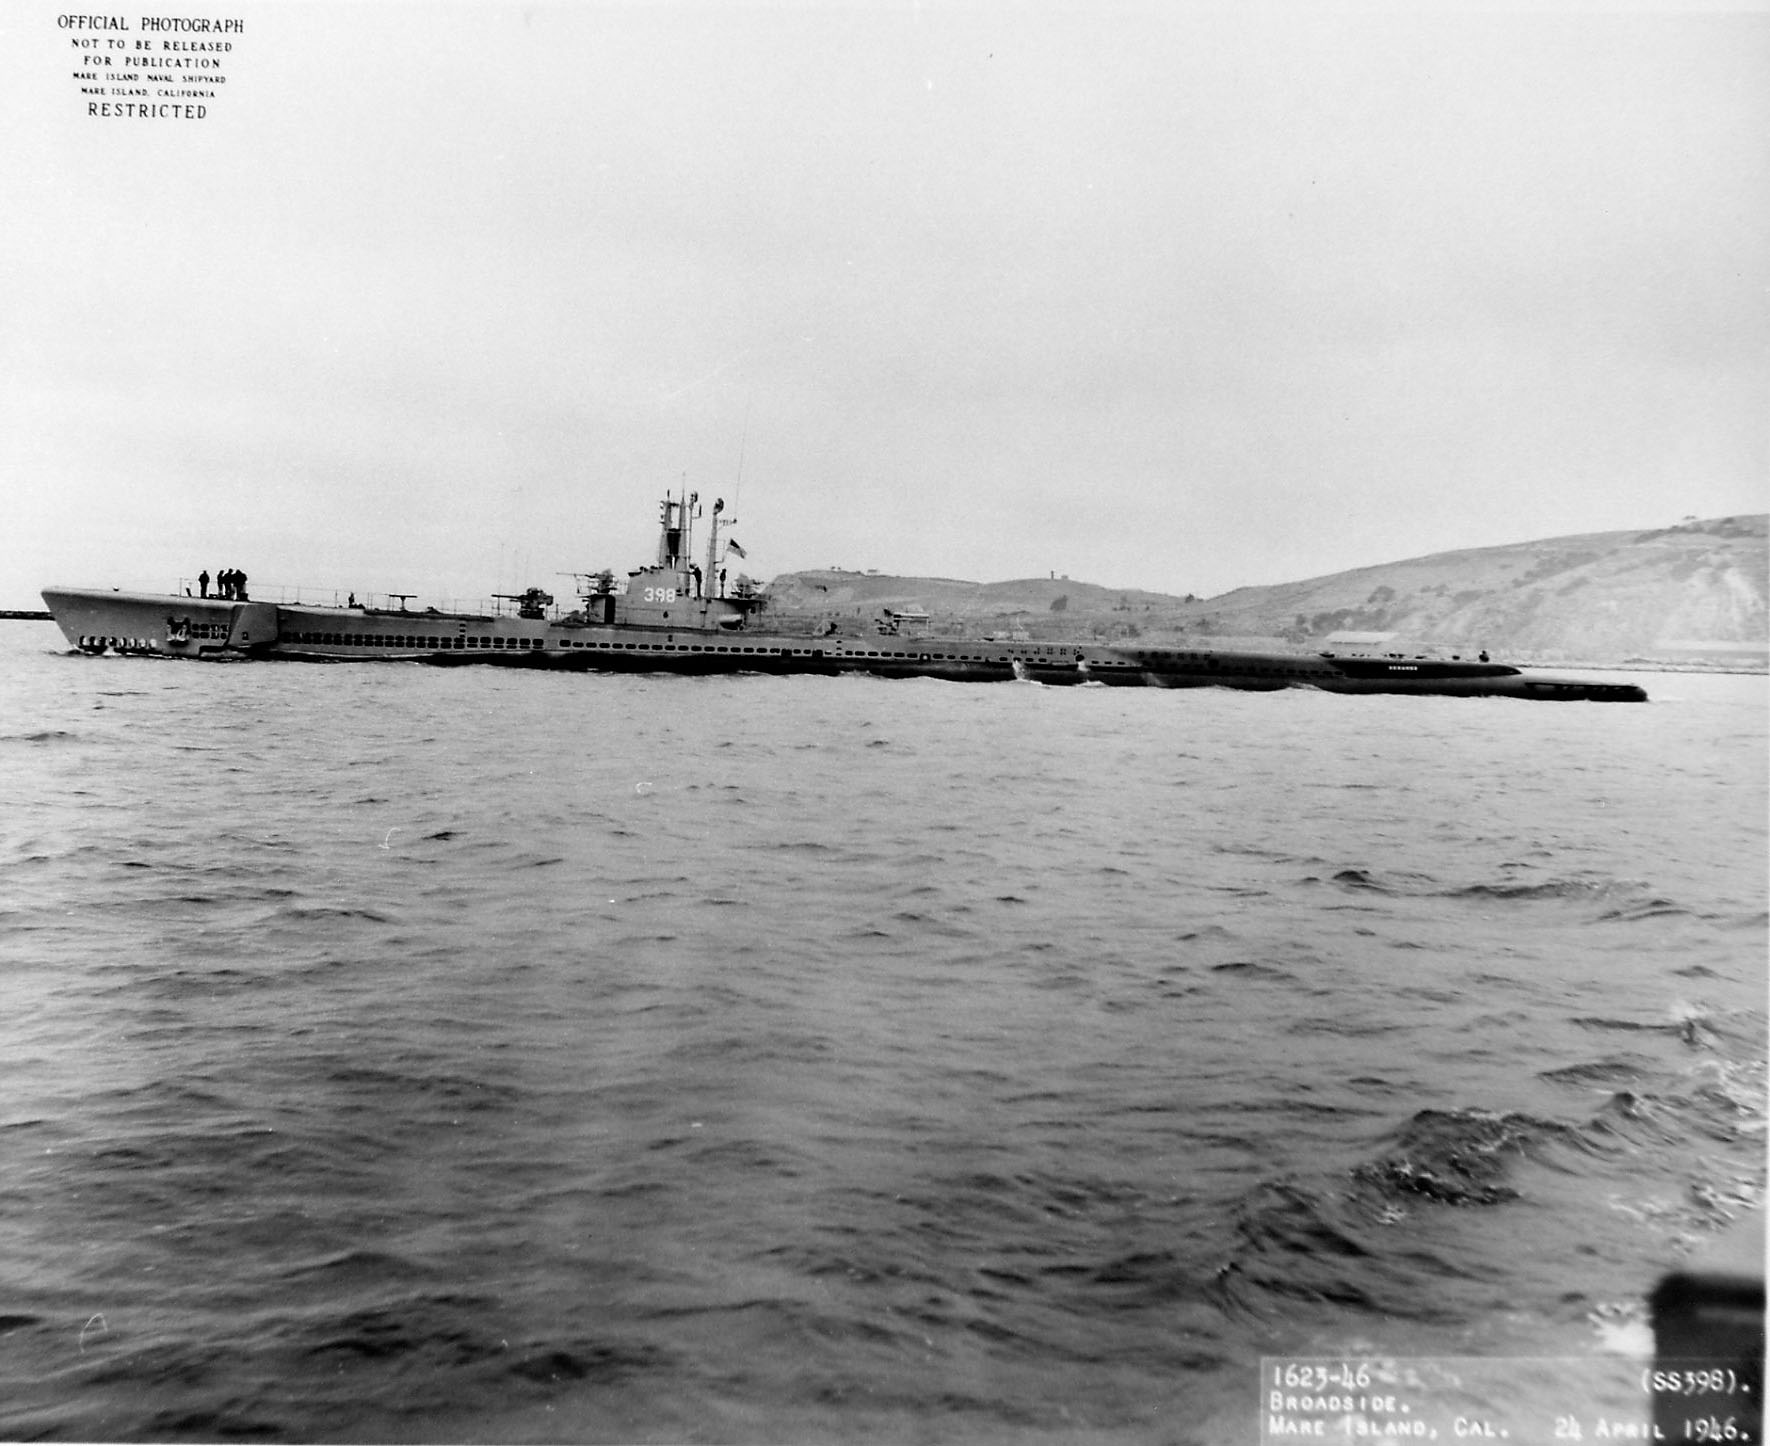 Broadside view of USS Segundo departing Mare Island Naval Shipyard, California, United States, 24 Apr 1946, photo 1 of 2